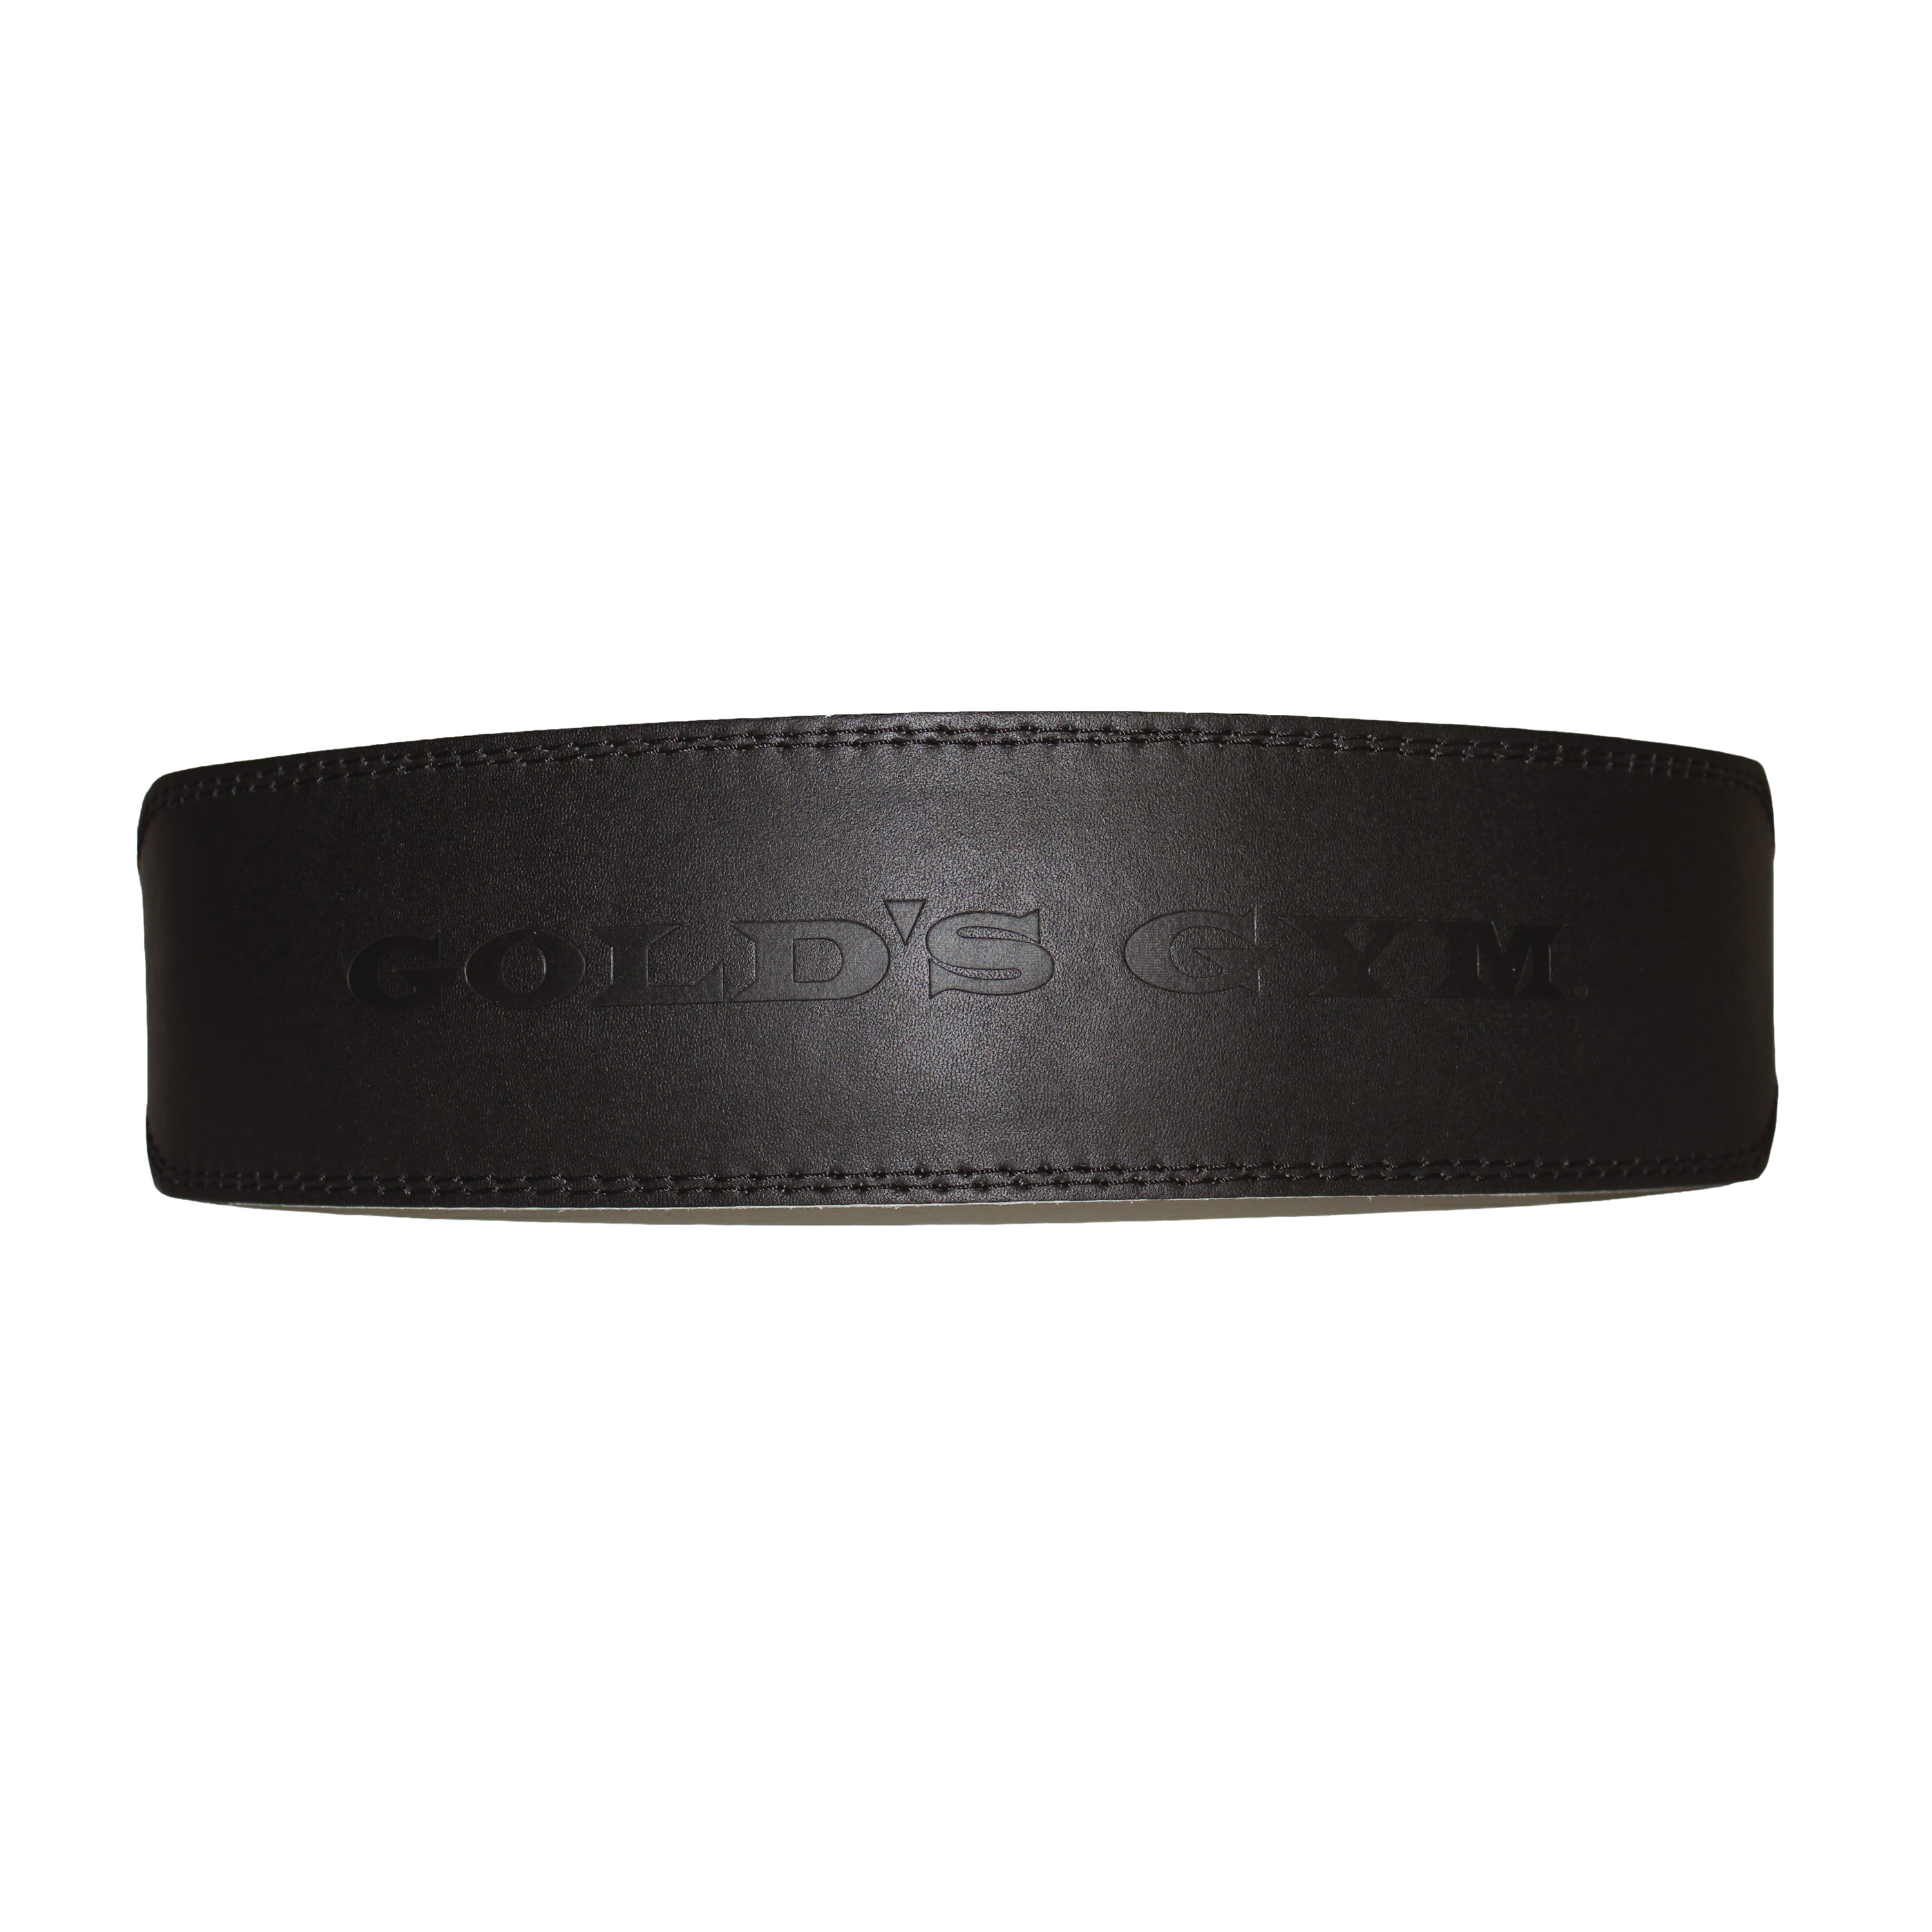 Golds Gym Leather Belt - LUMBAR - Large